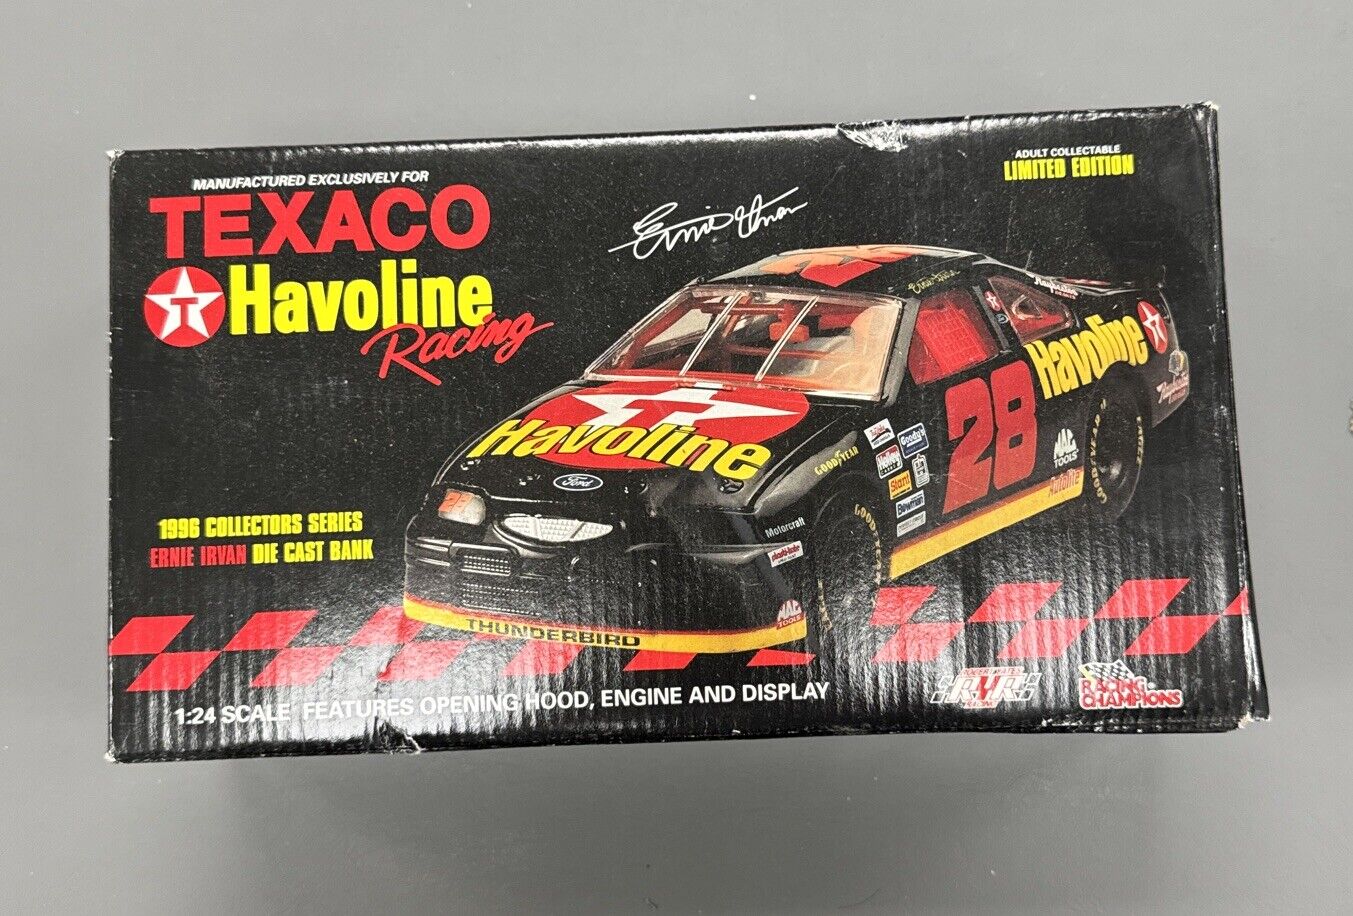 Texaco Havoline Racing 1:24 Scale Ernie Irvan 1996 Collectable Die Cast Bank 